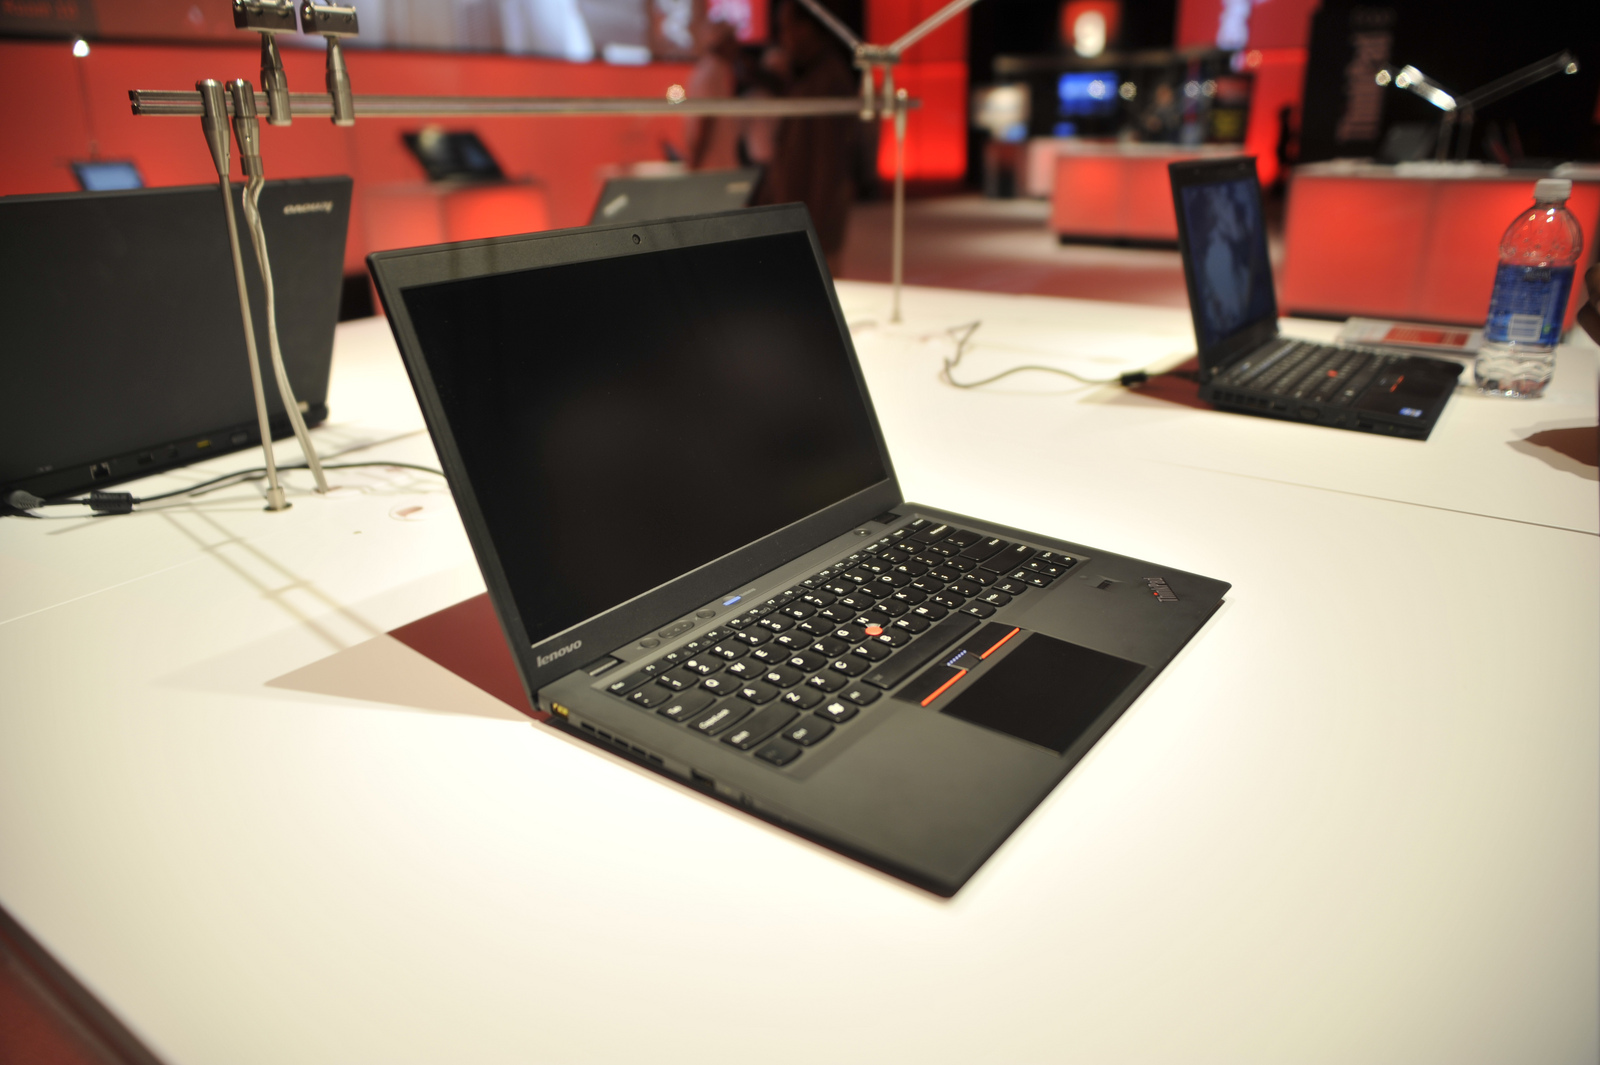 Lenovo ThinkPad X1 Carbon.